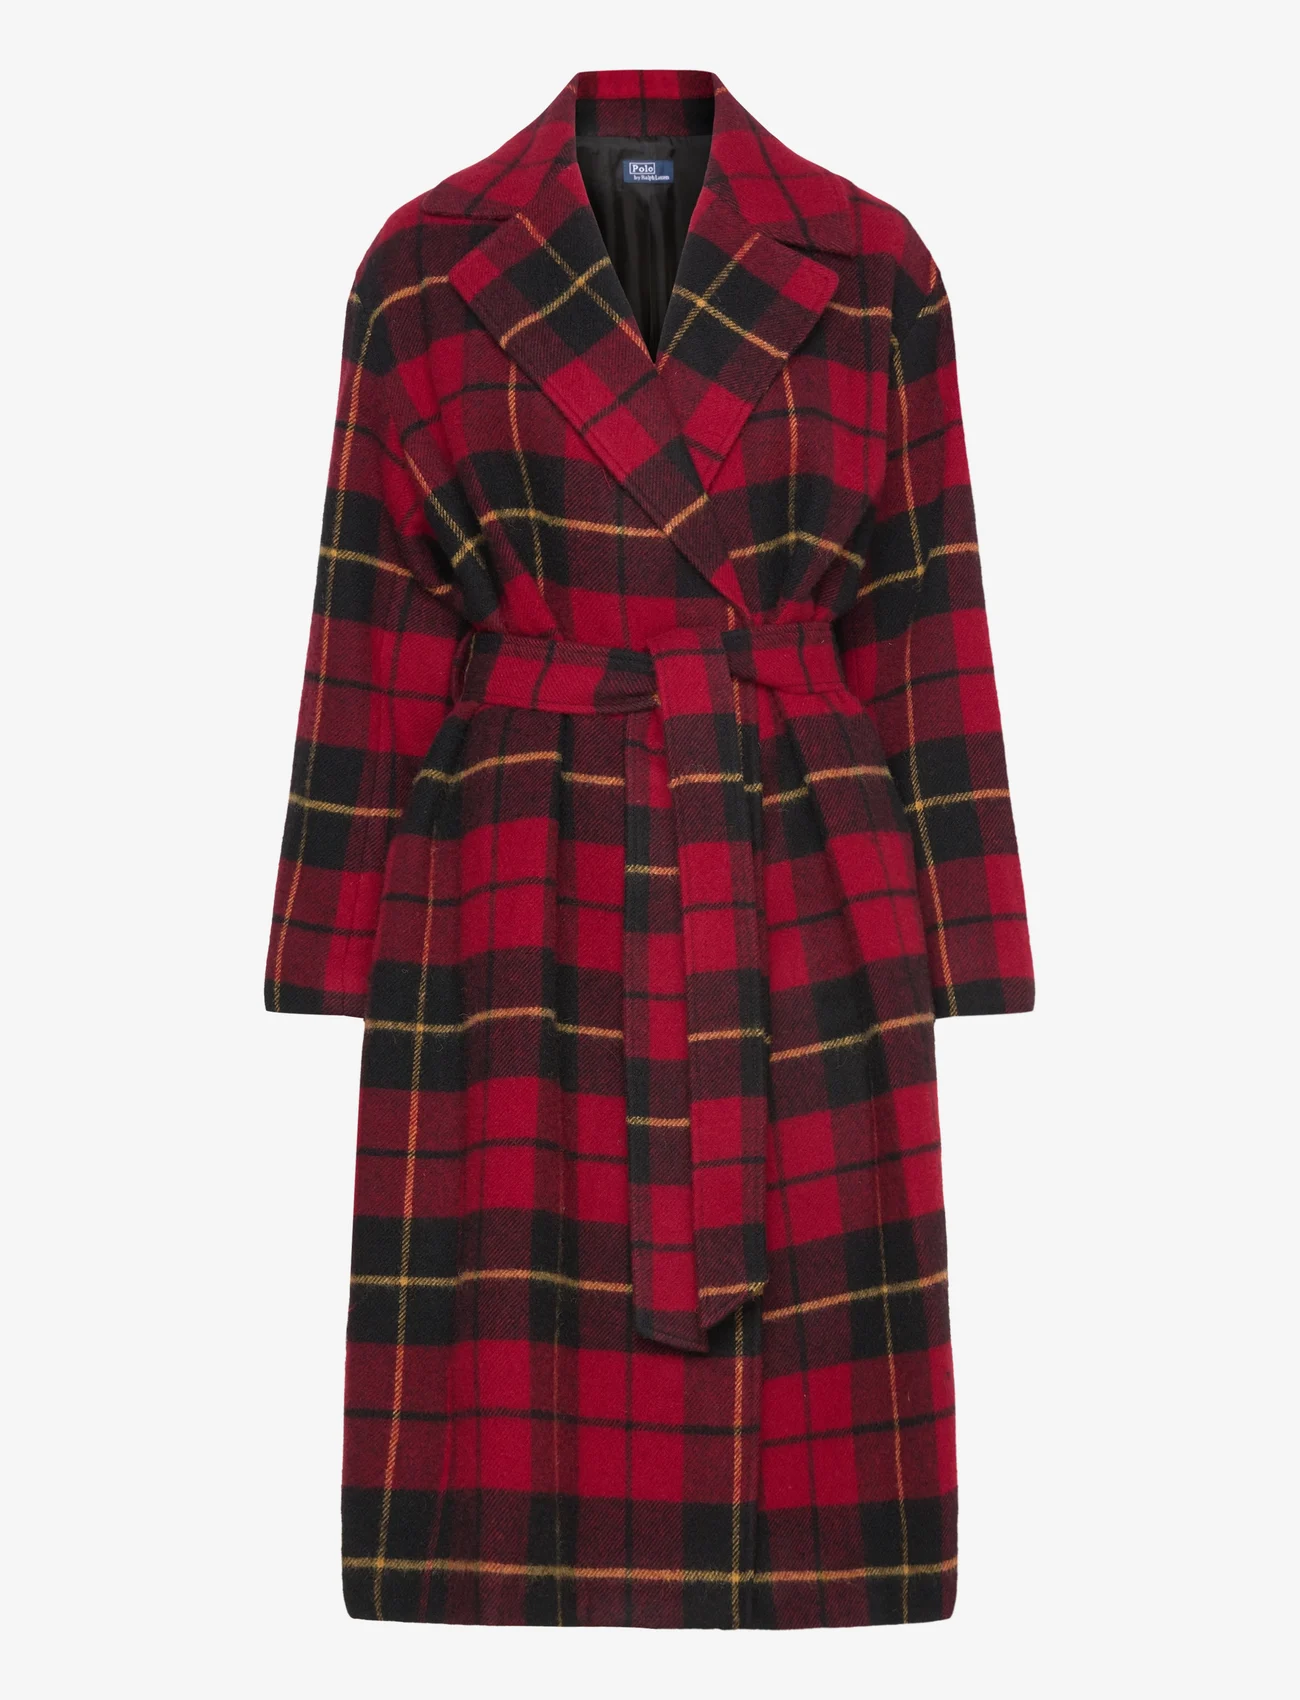 Polo Ralph Lauren - Plaid Motif Wool Twill Wrap Coat - ziemas jakas - 1500 red multi pl - 0